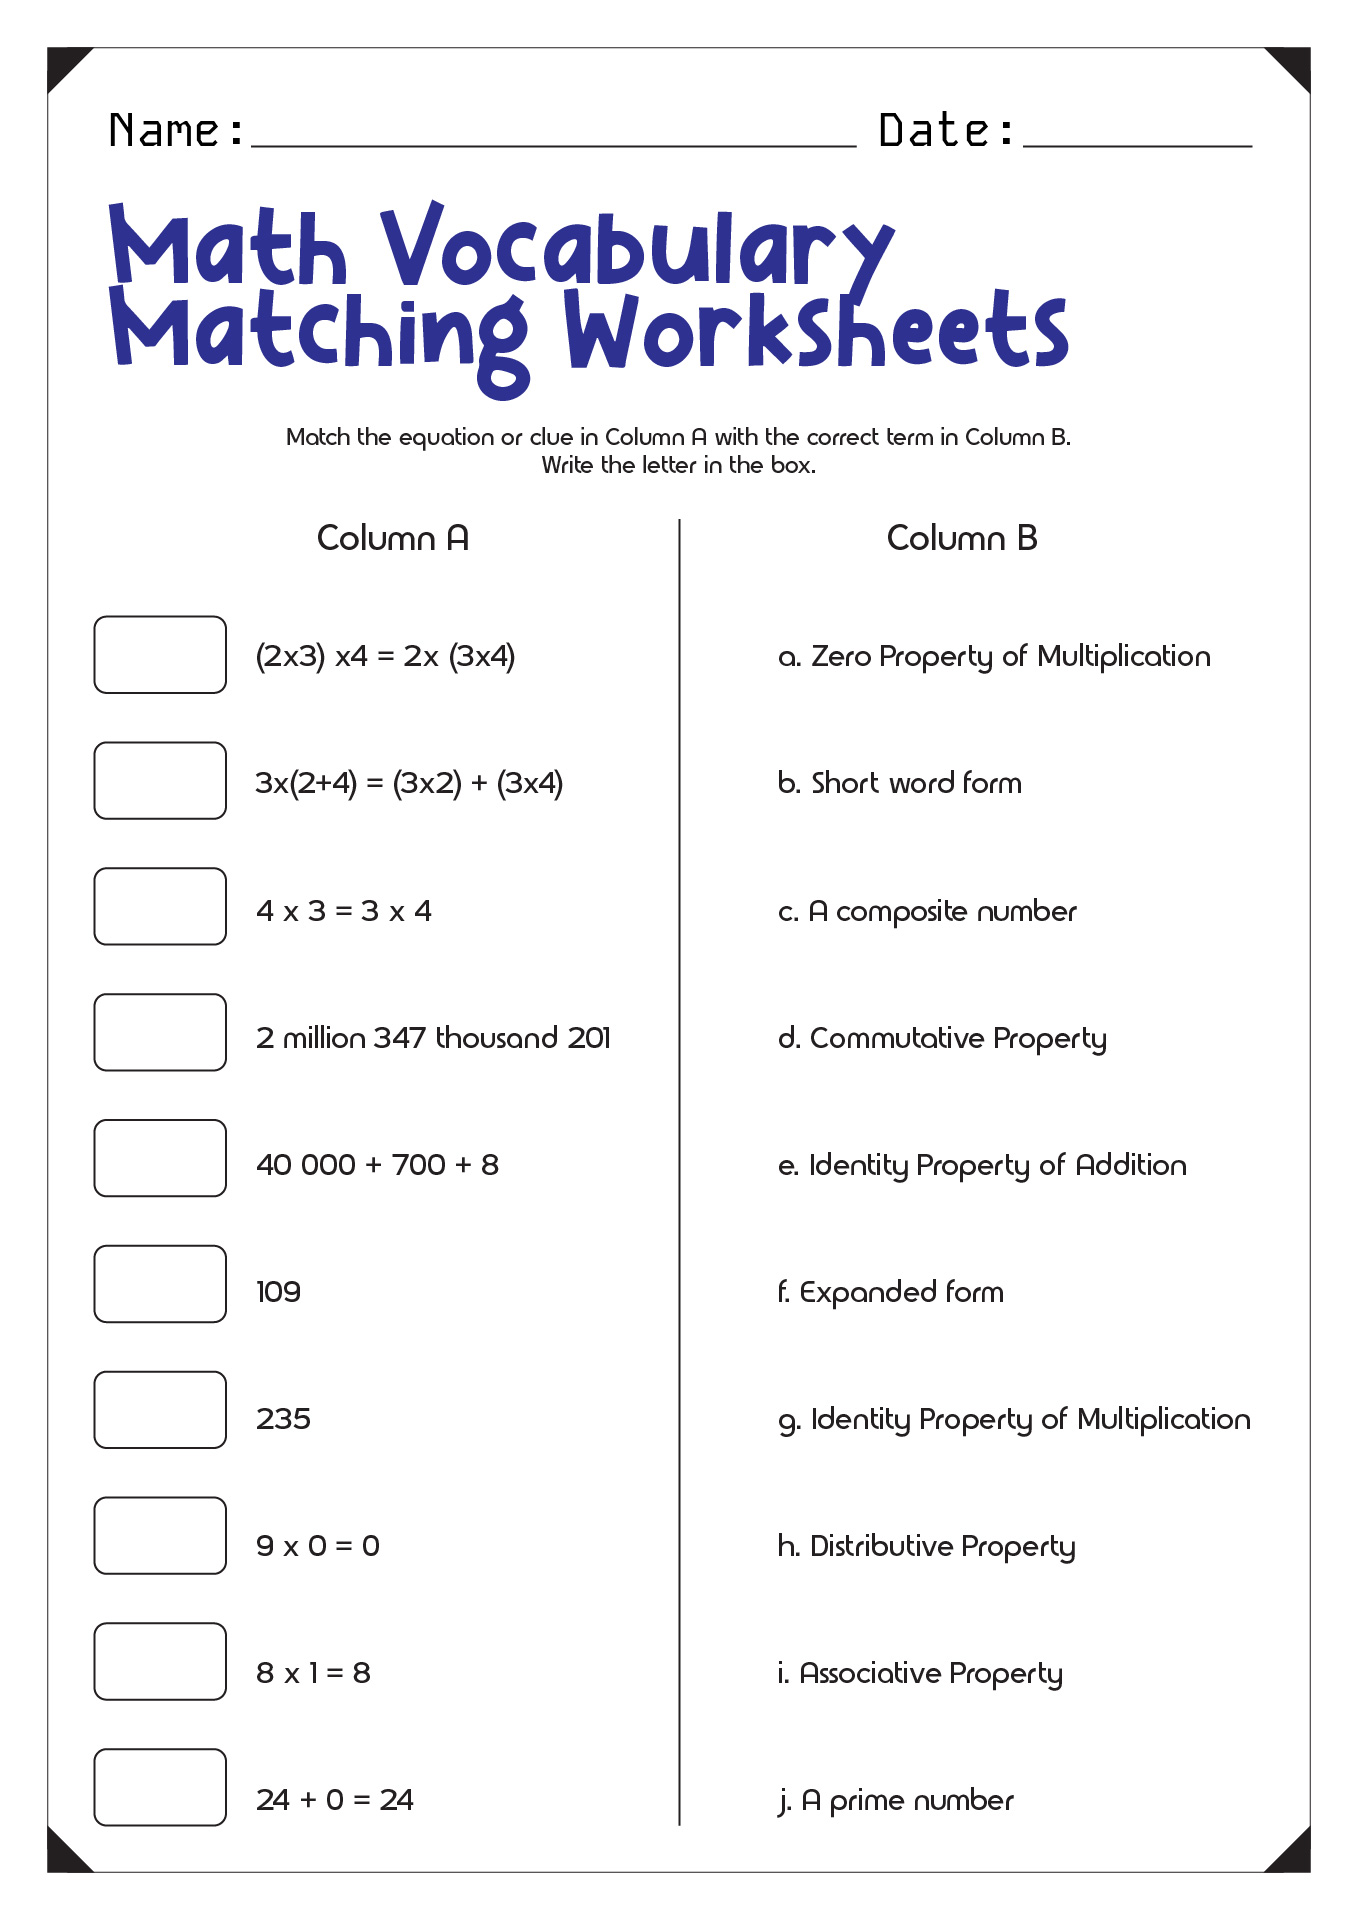 Math Vocabulary Matching Worksheet